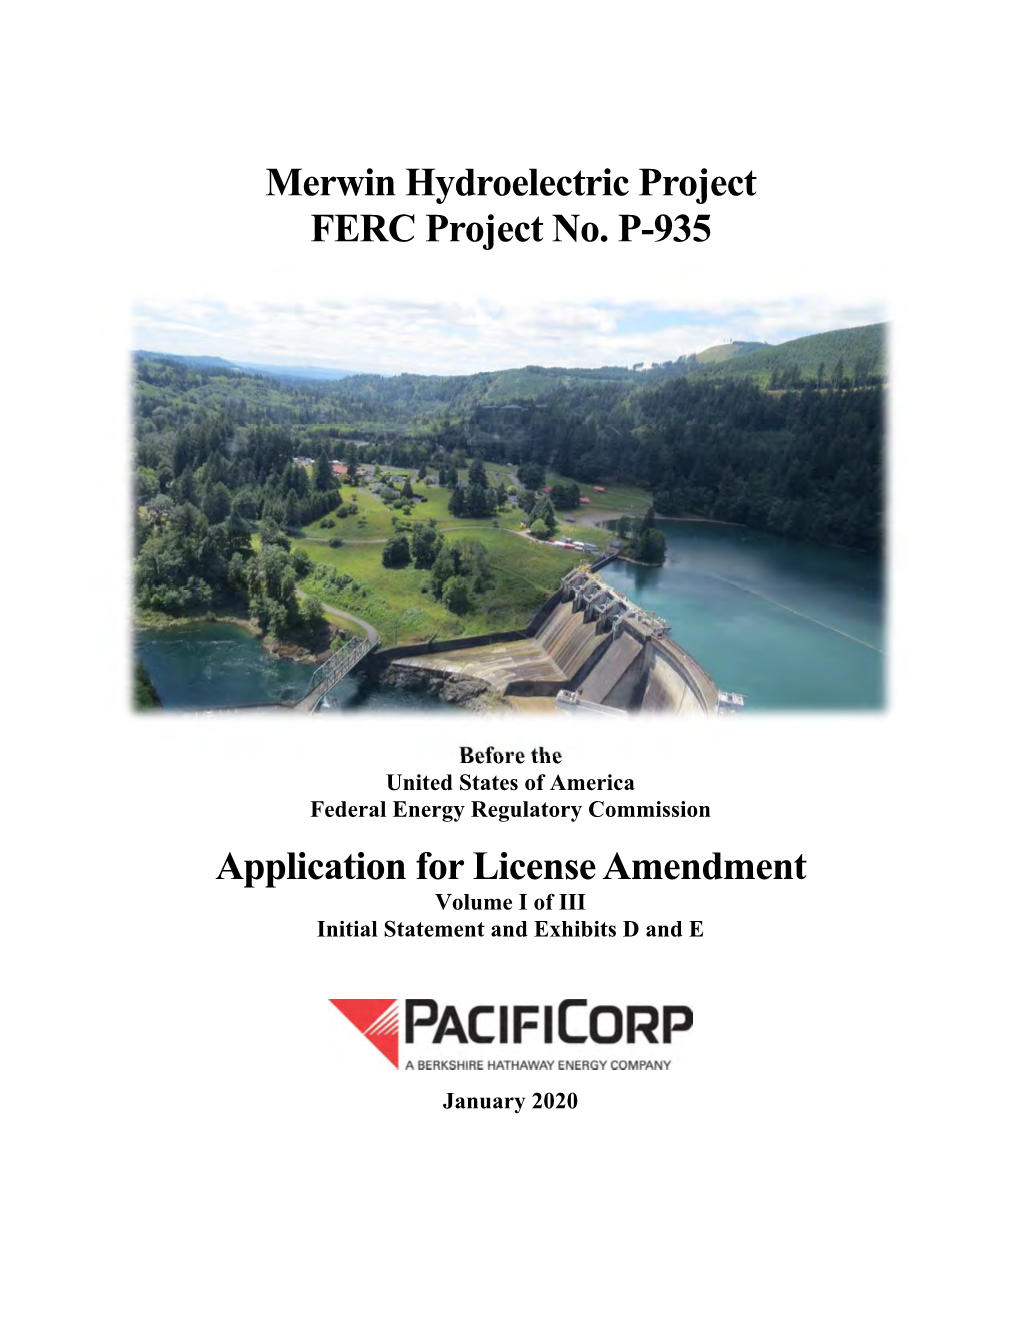 Merwin Hydroelectric Project FERC Project No. P-935